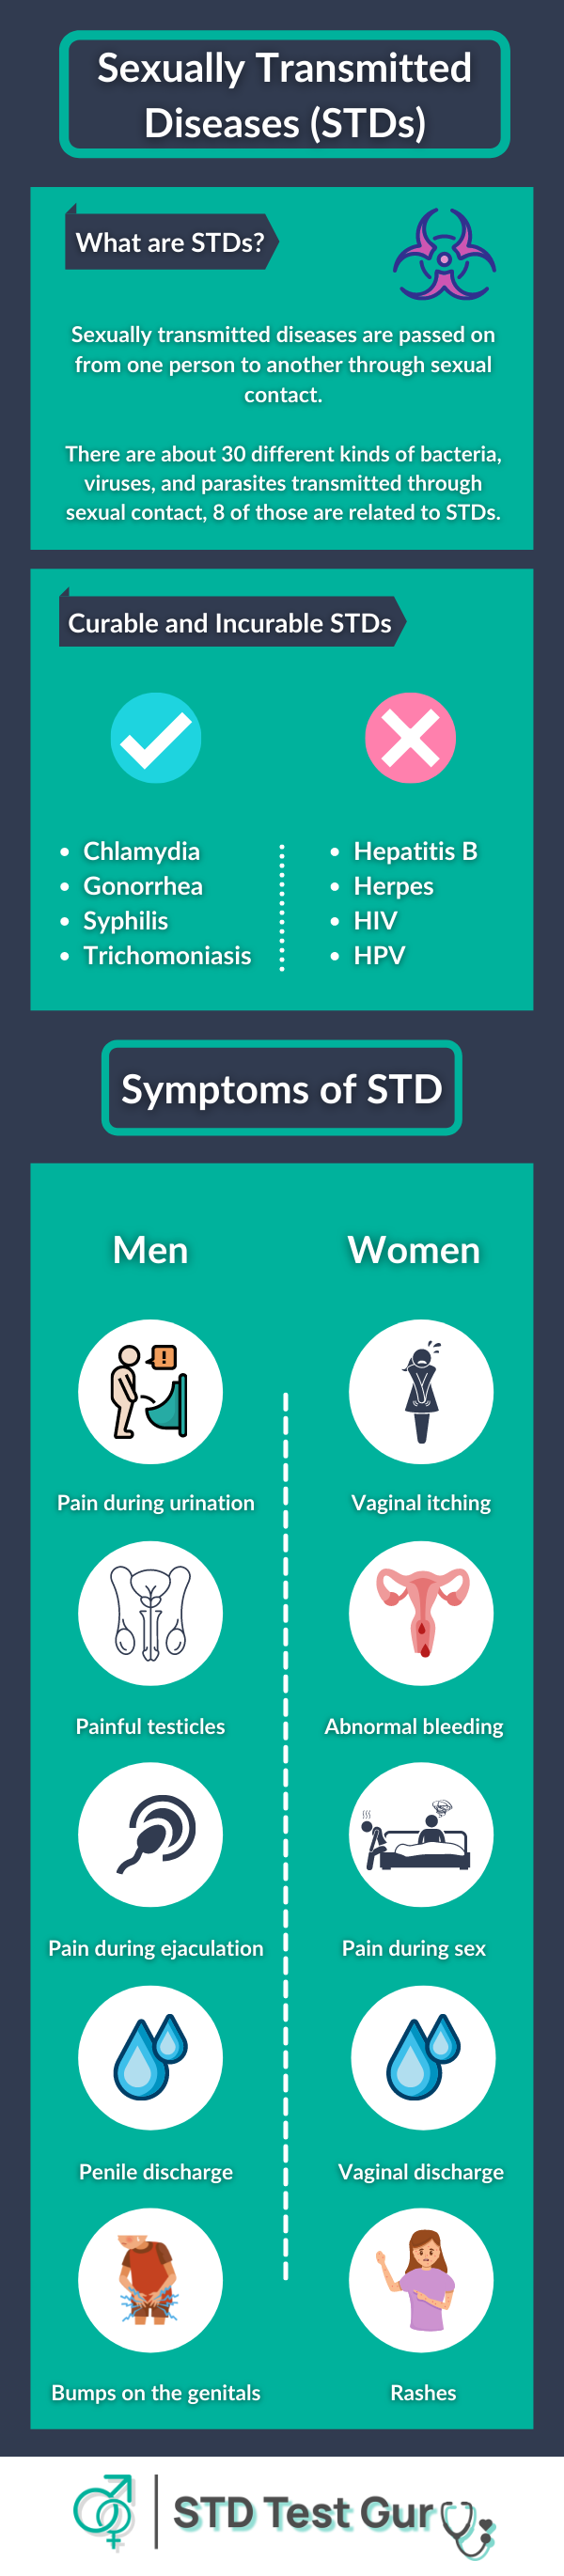 Symptoms of STDs in Men and Women